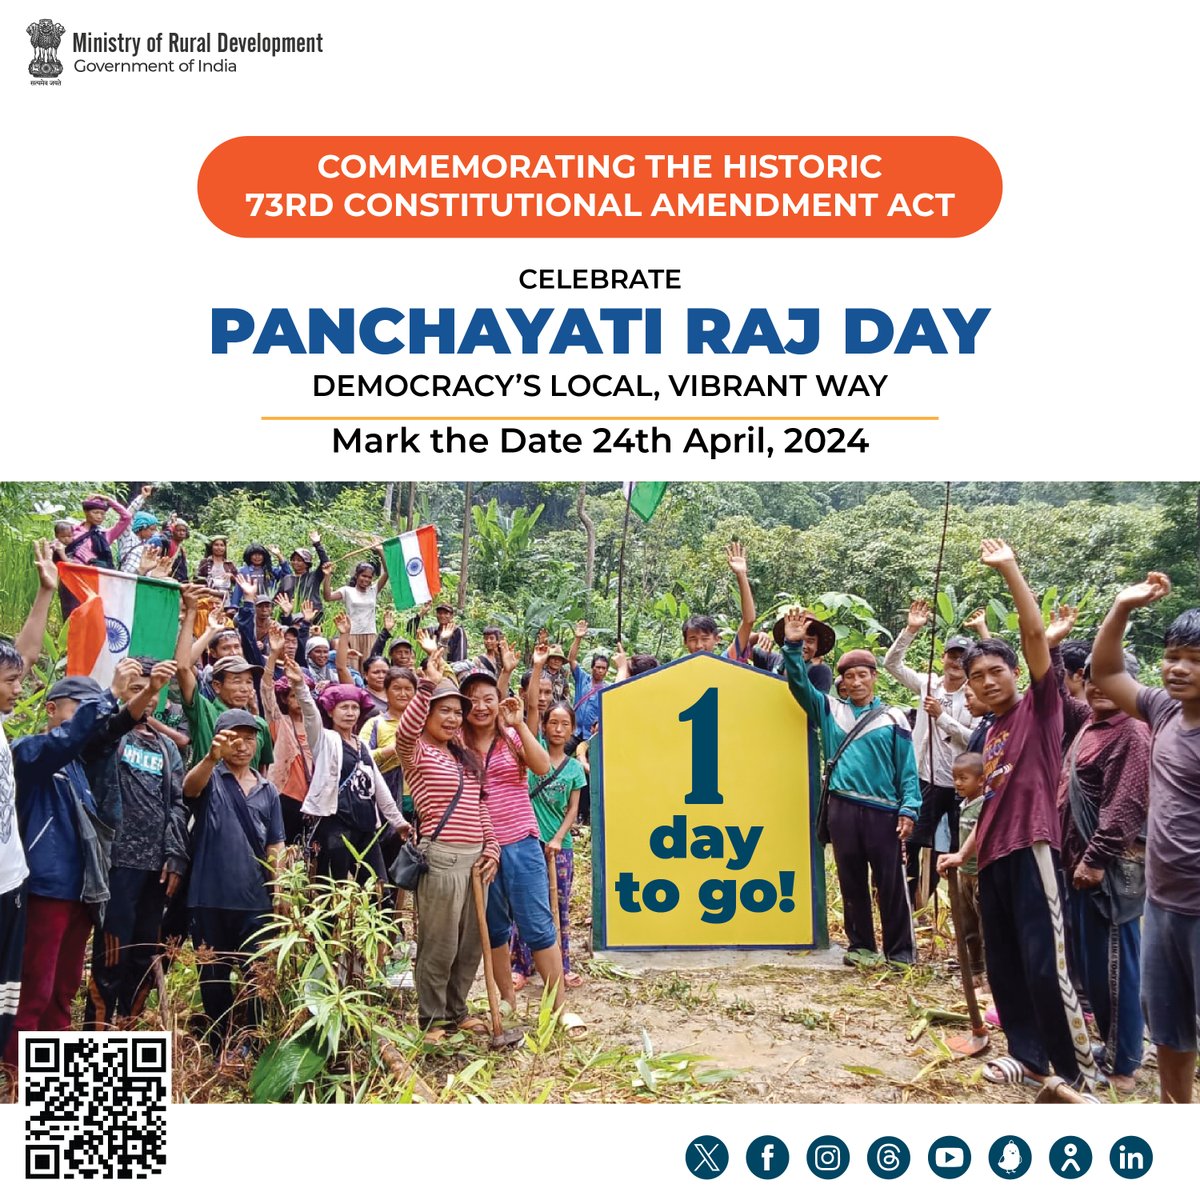 1 Day to go! #NationalPanchayatiRajDay #PanchayatiRajDay #PanchayatiRajDay2024